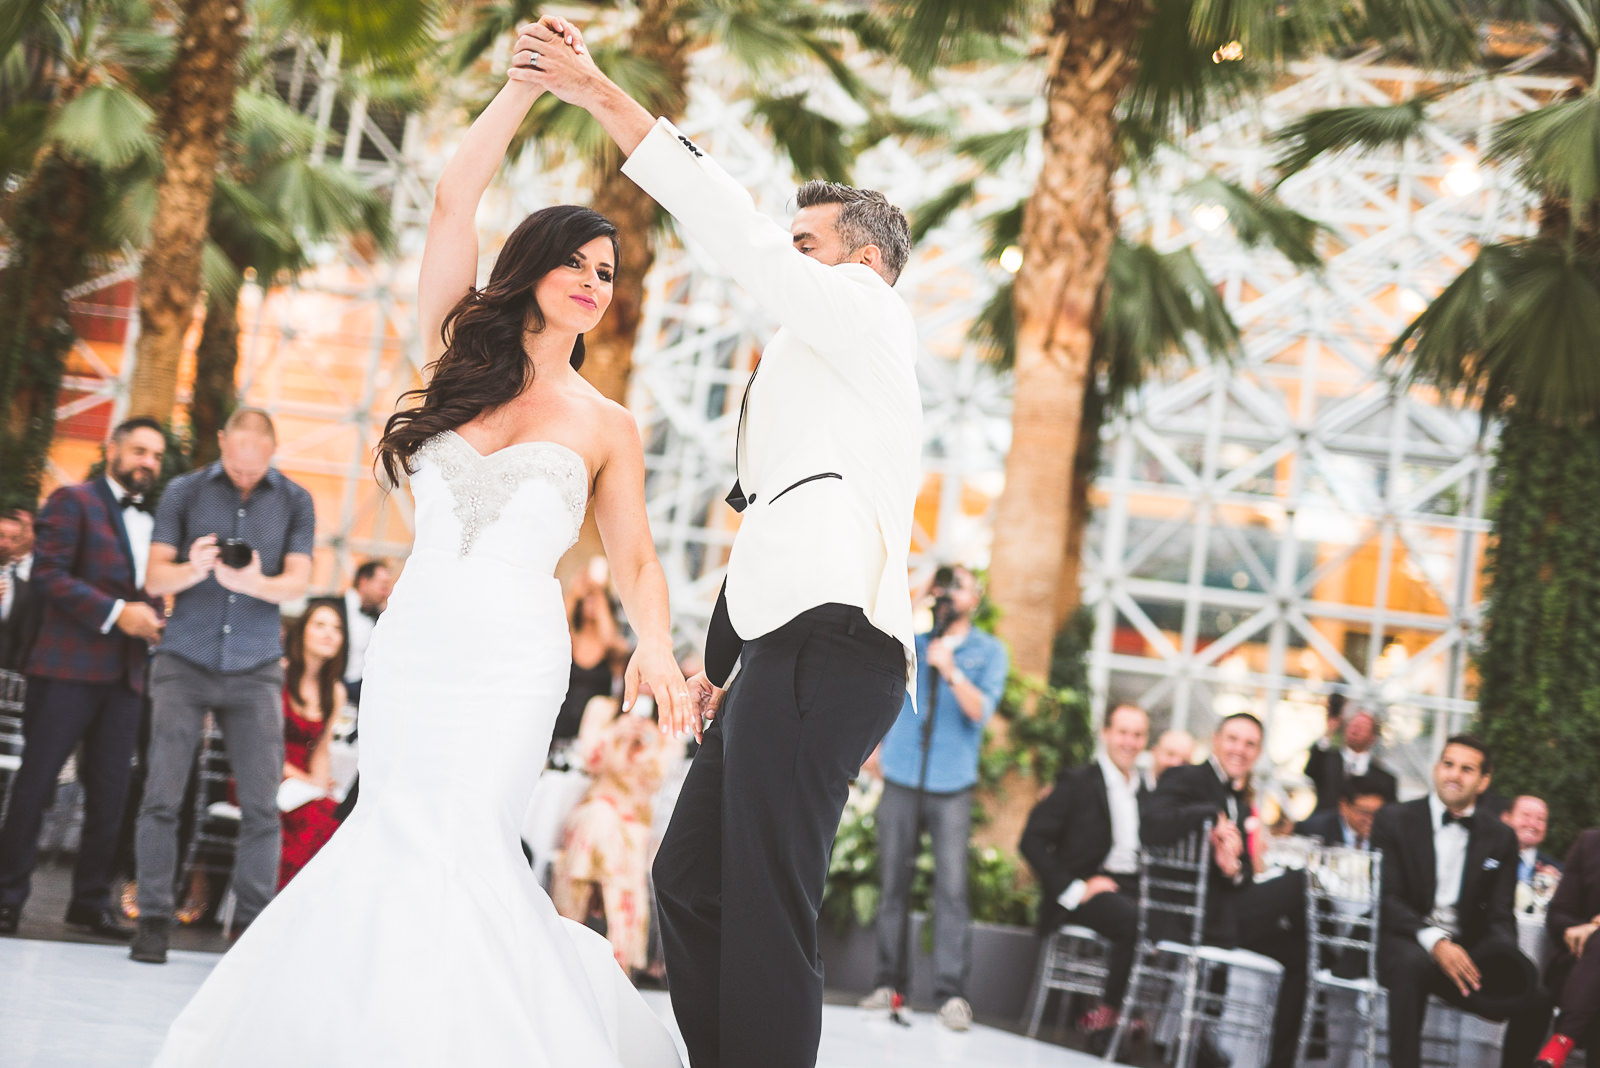 81 spin during dance - Marisa + Chris // Chicago Wedding Photos at Navy Pier Crystal Garden